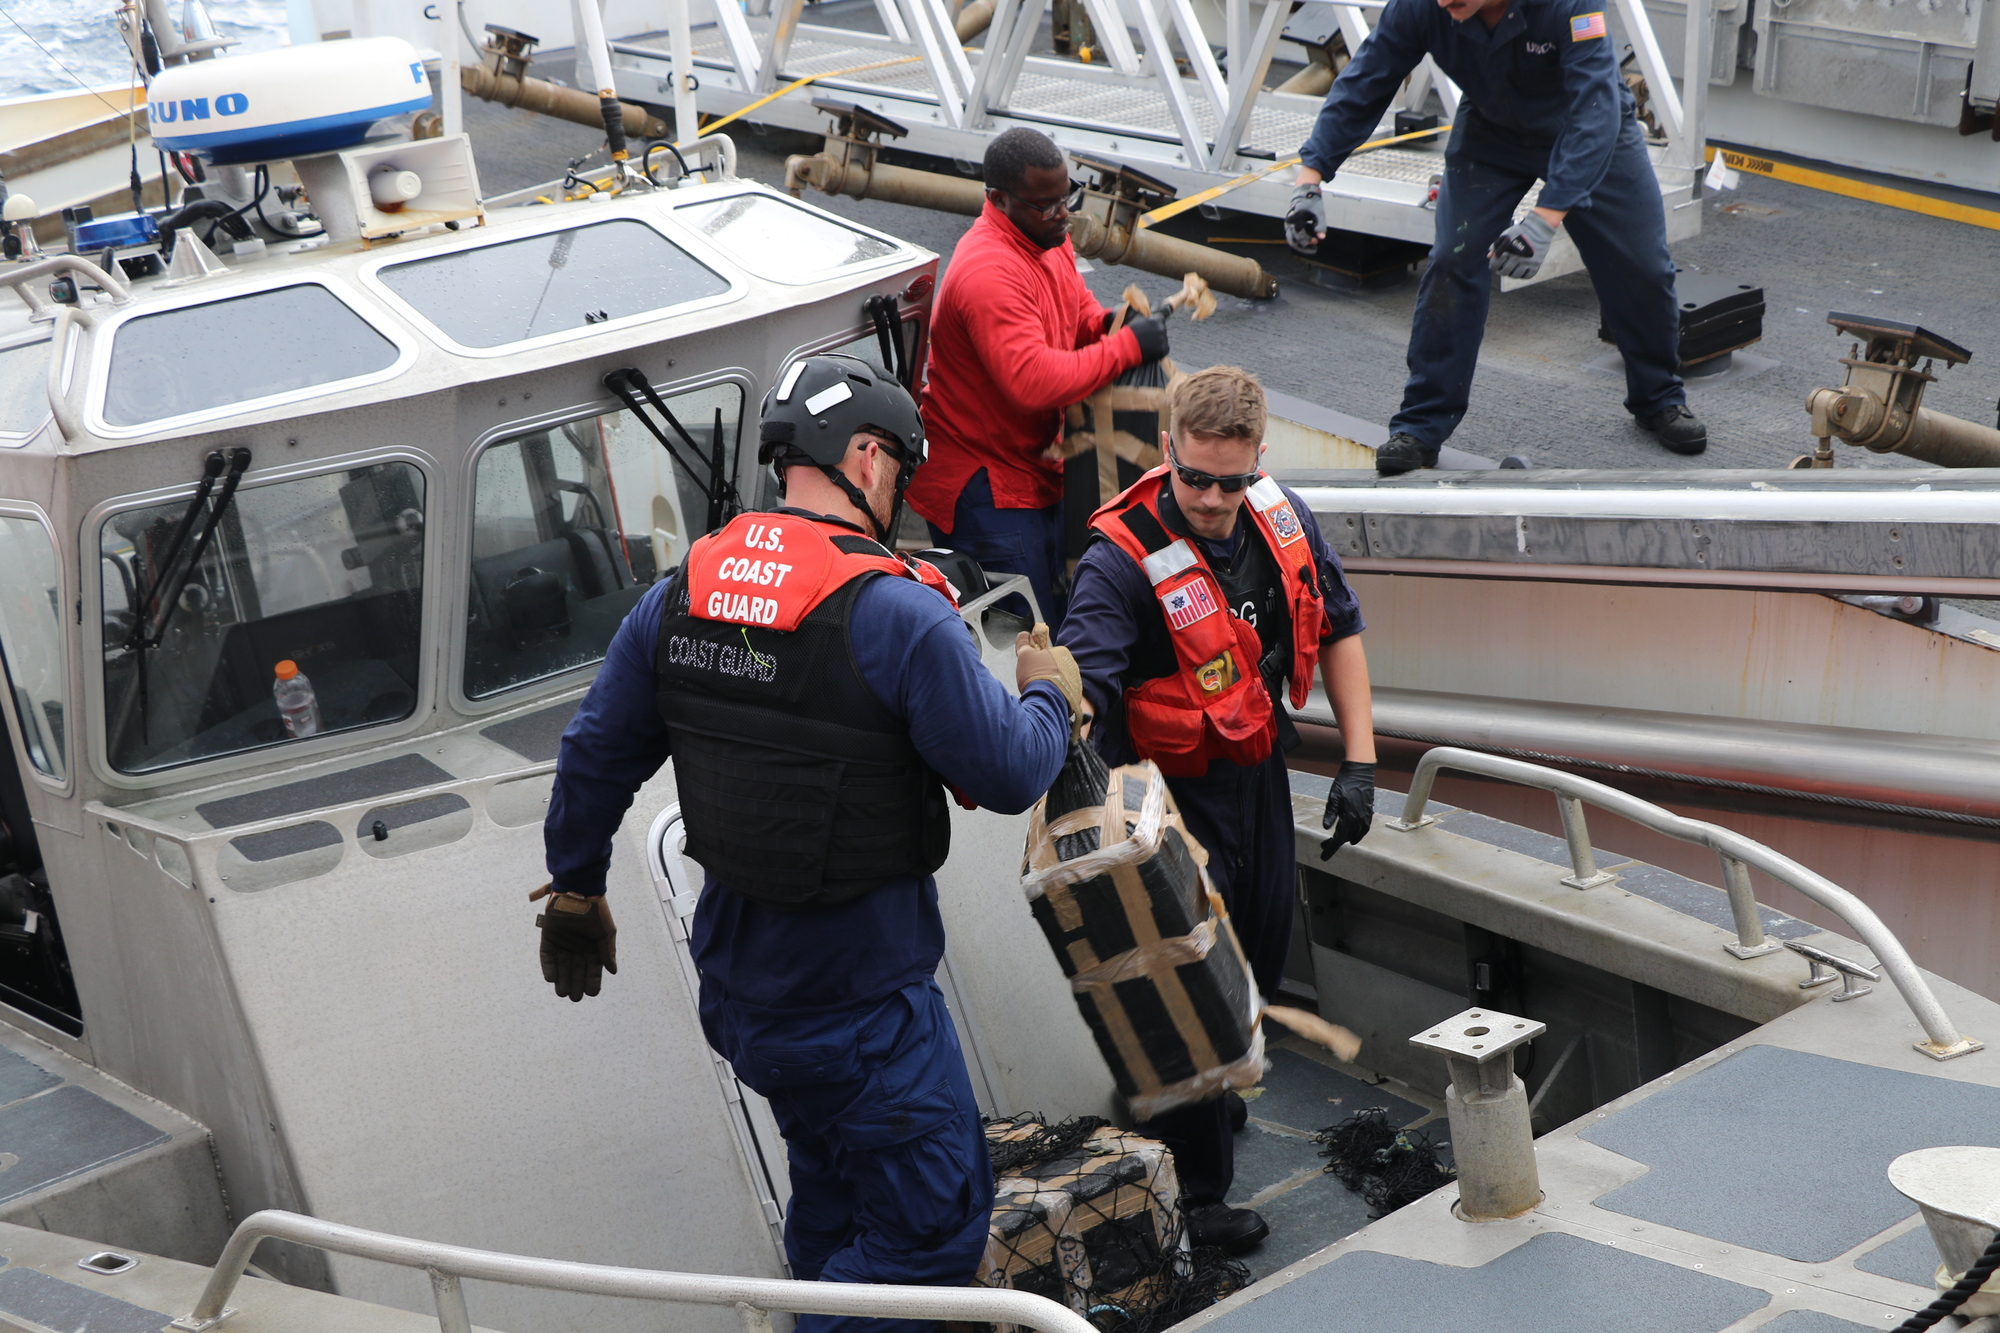 Coast Guard Cutter Munro boarding team interdicts suspected drug smuggling vessel